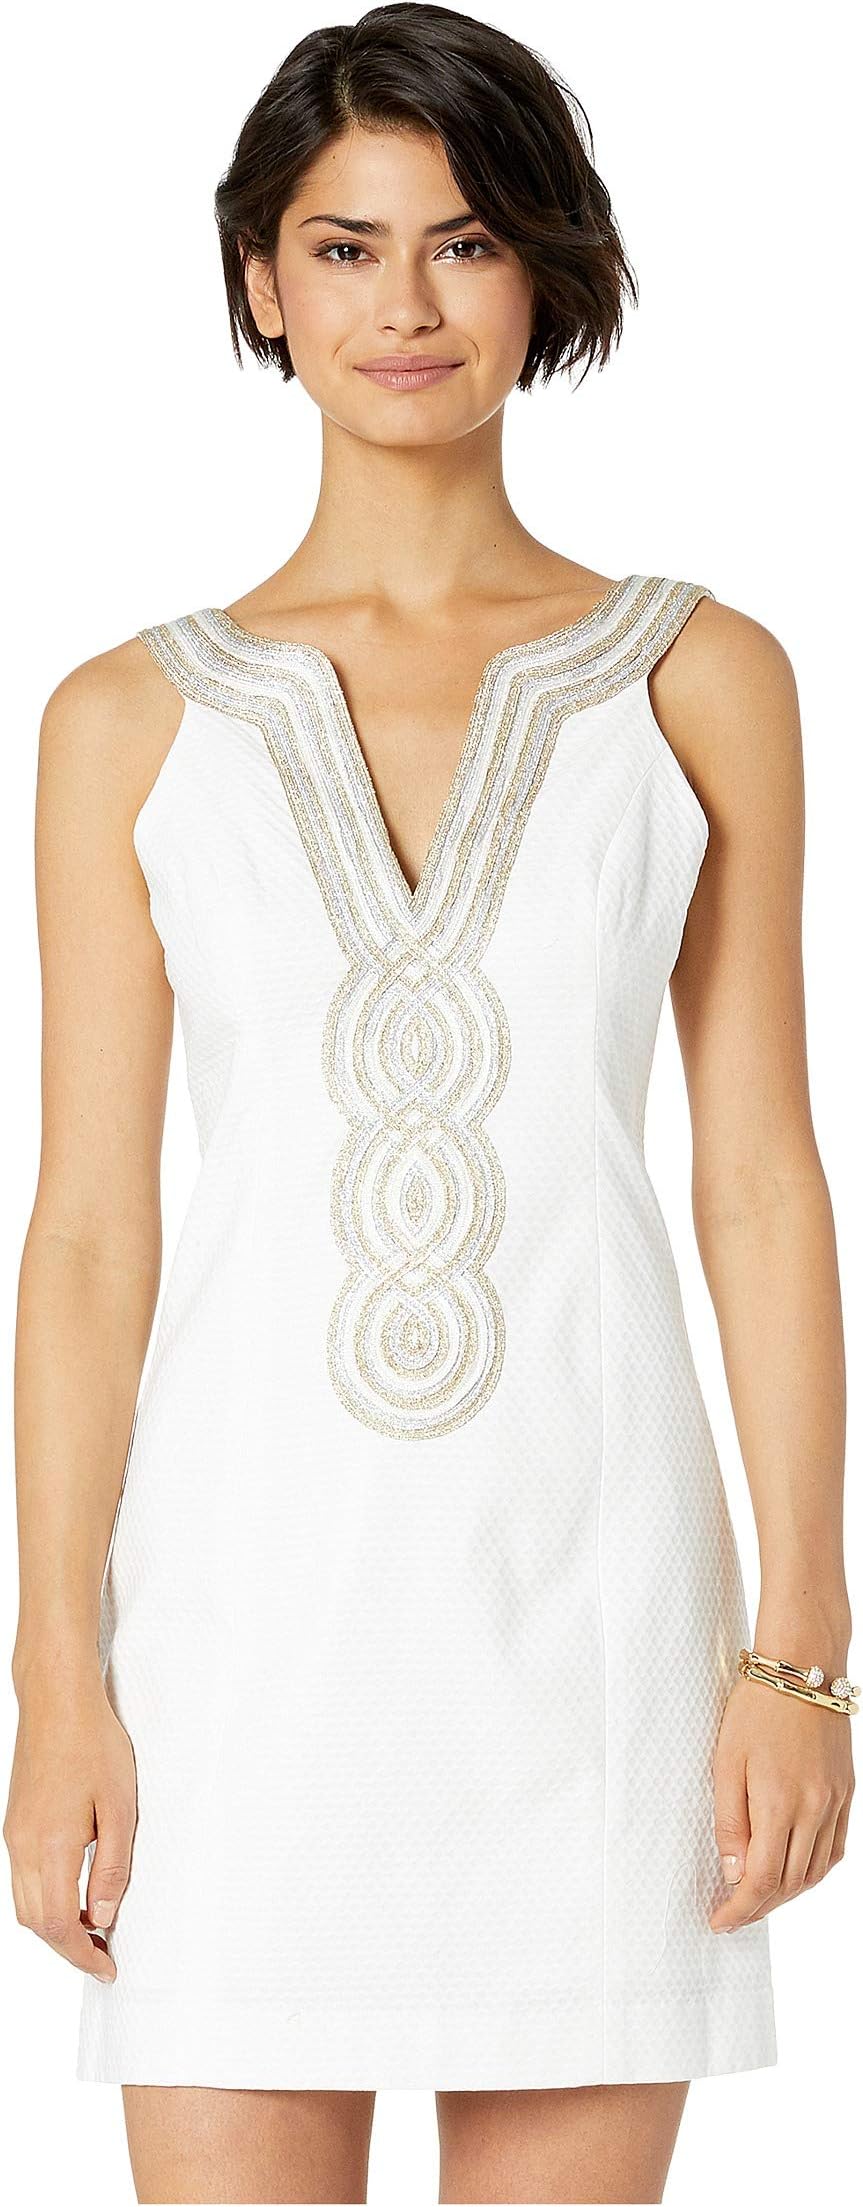 Свободное платье Valli Lilly Pulitzer, цвет Resort White свитер зандры lilly pulitzer цвет resort white